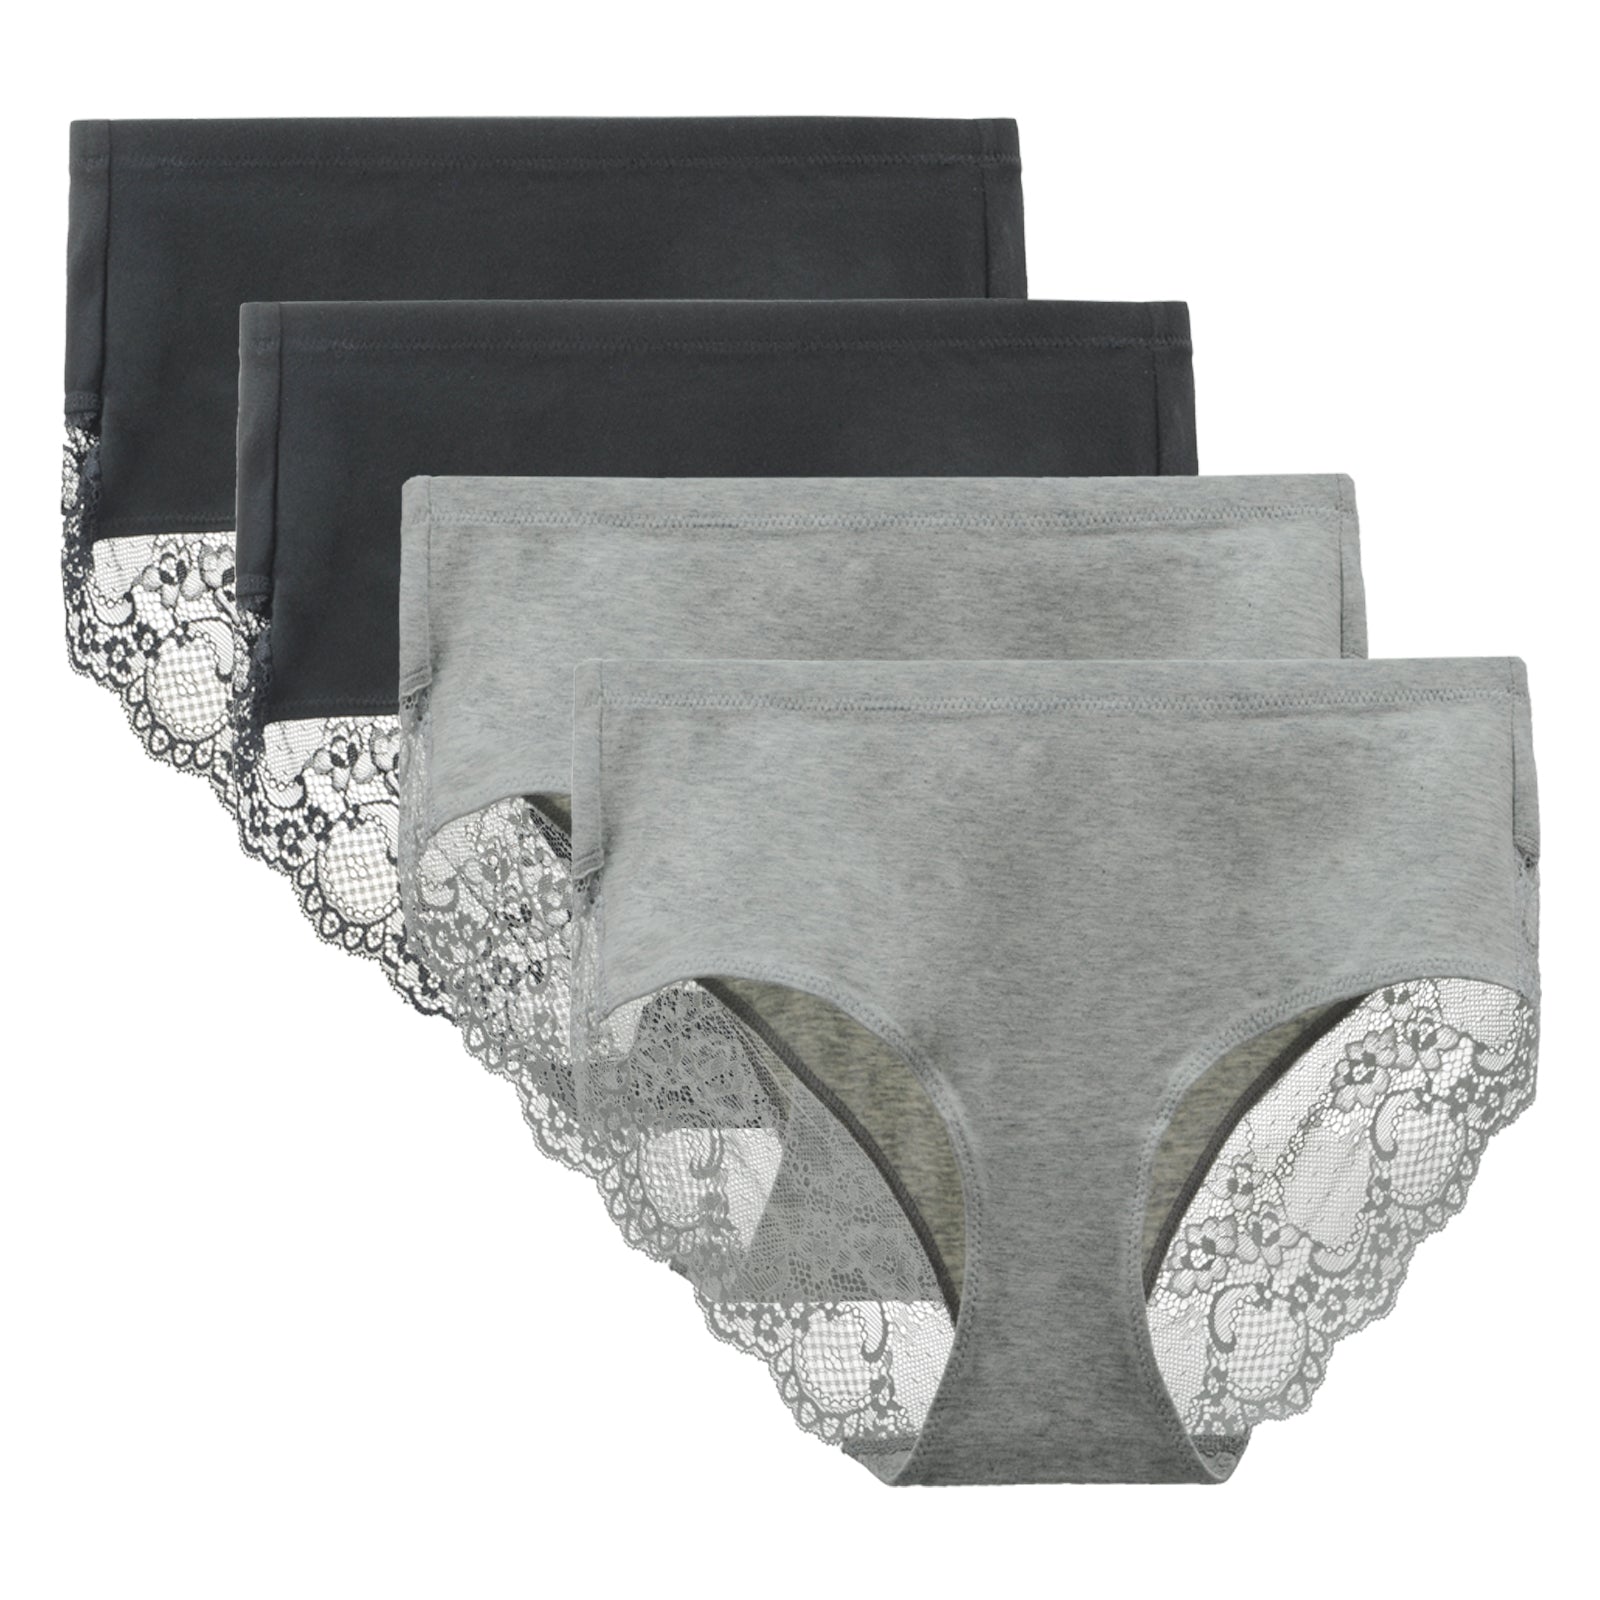 LIQQY Women's 4 Pack No-Show Lingerie Thong Panties Underwear